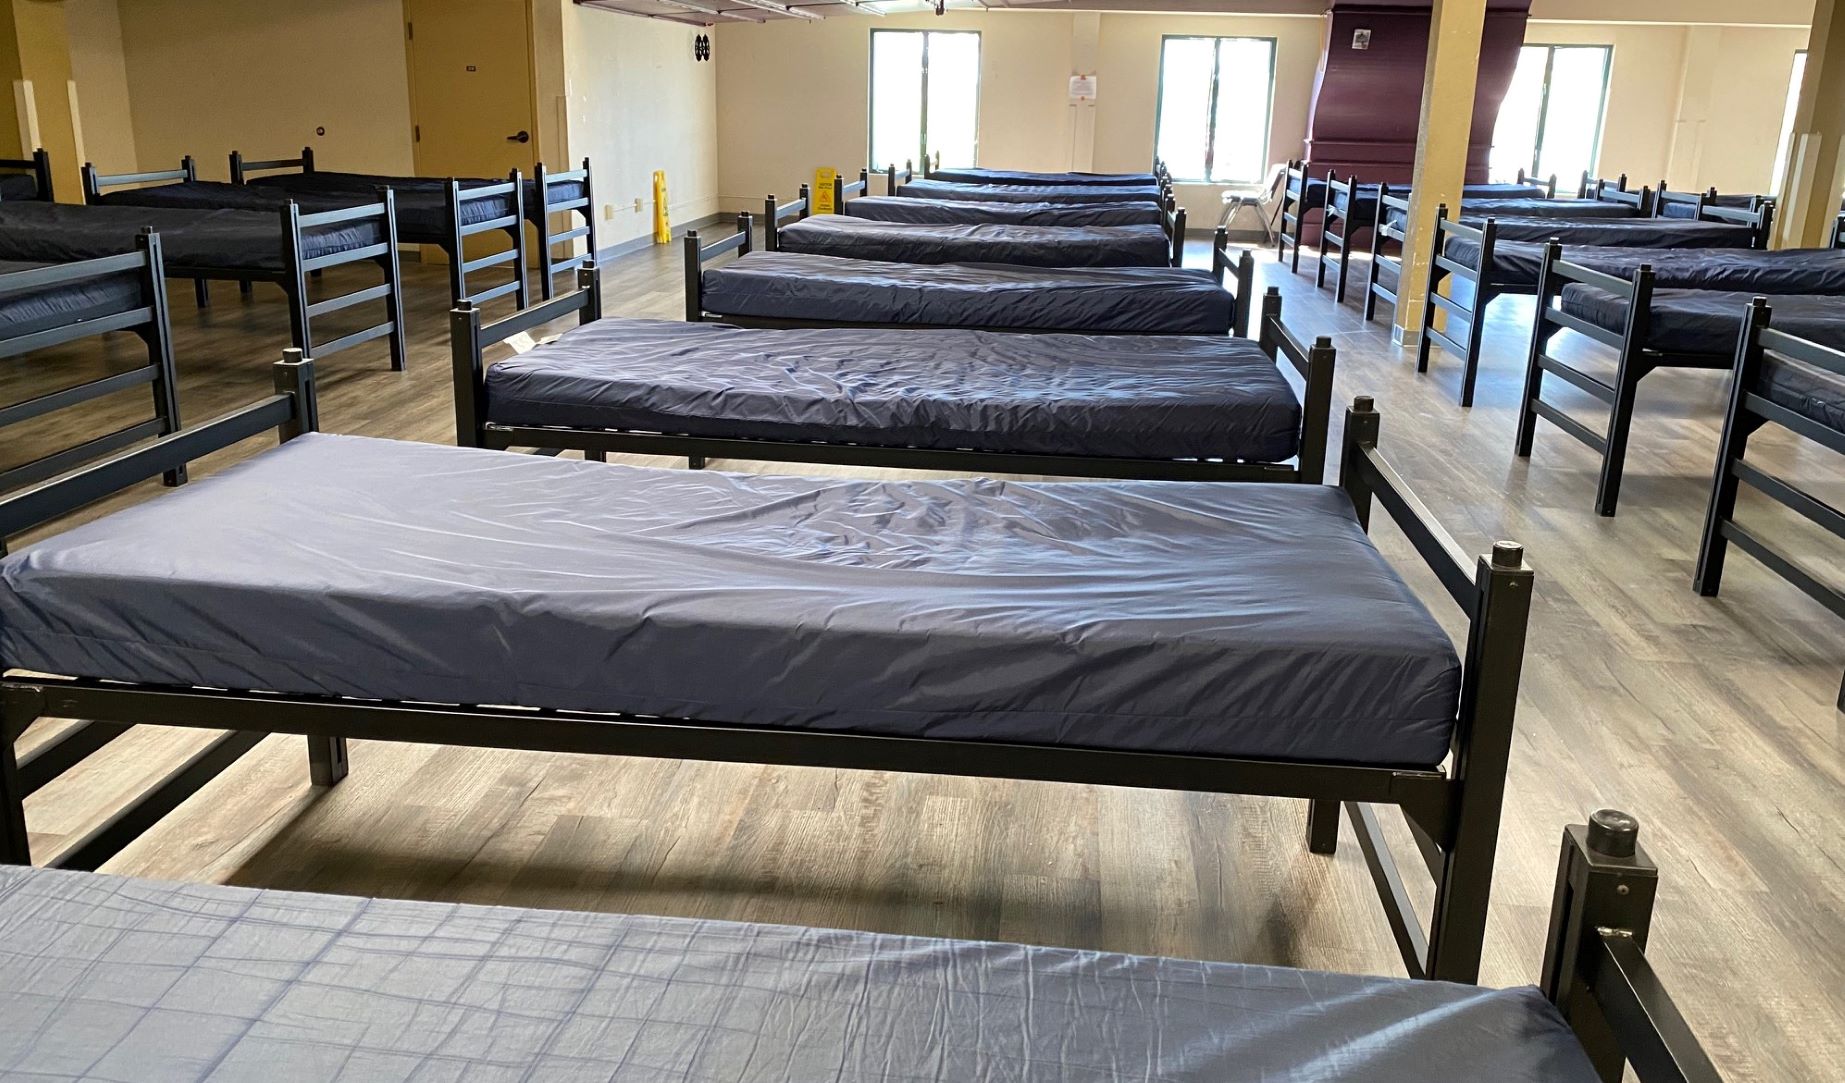 PATH New Beds in women's dorm